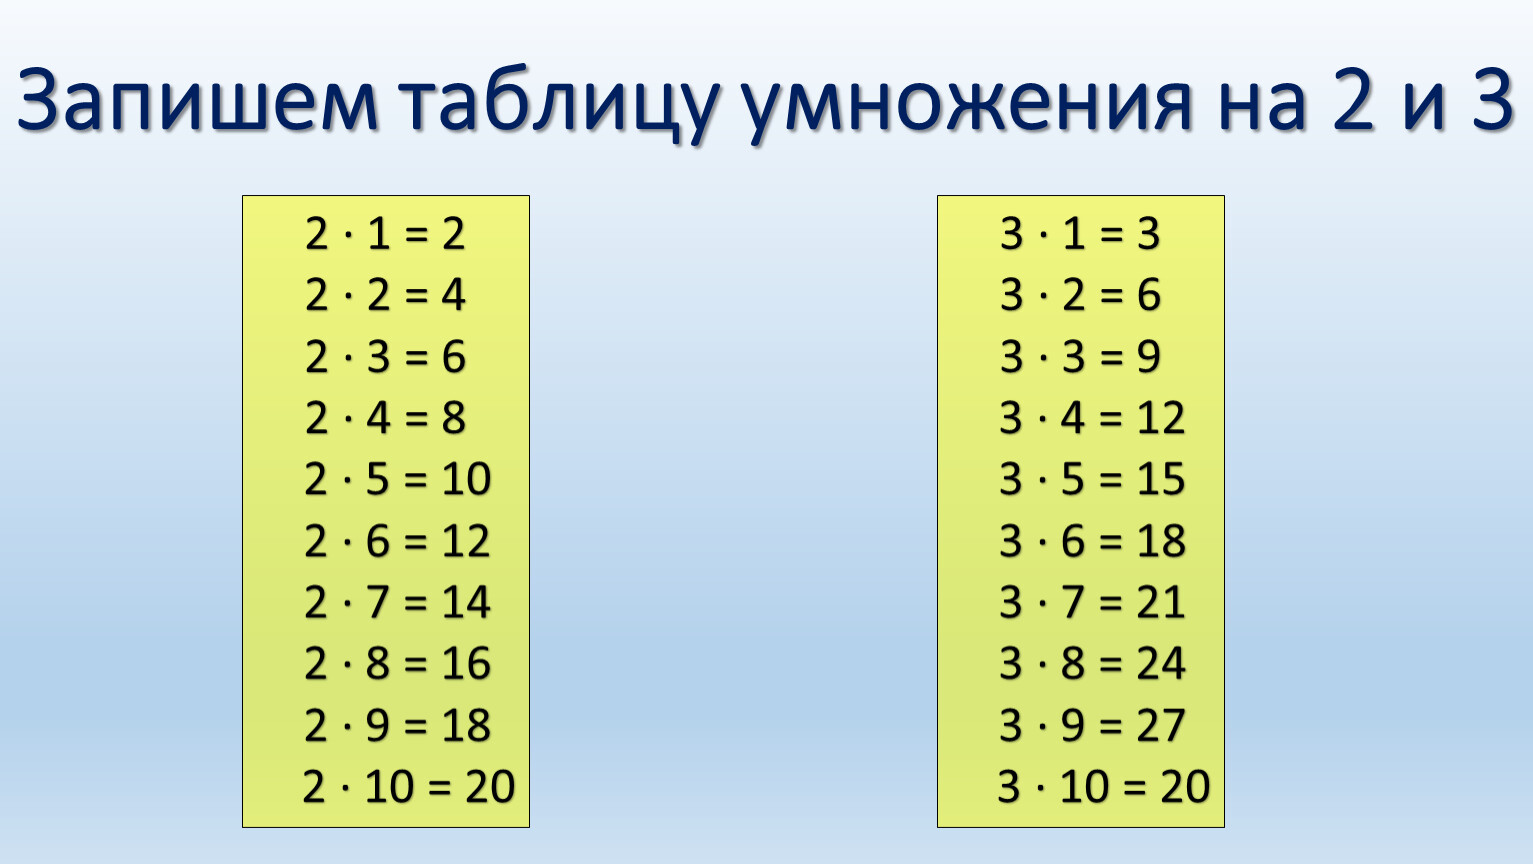 Видео умножение 3. Таблица умножения на 2 и 3. Таблица умножения на 3 е. Таблица умножения на 2. Таблица умножения на 2 3 4.